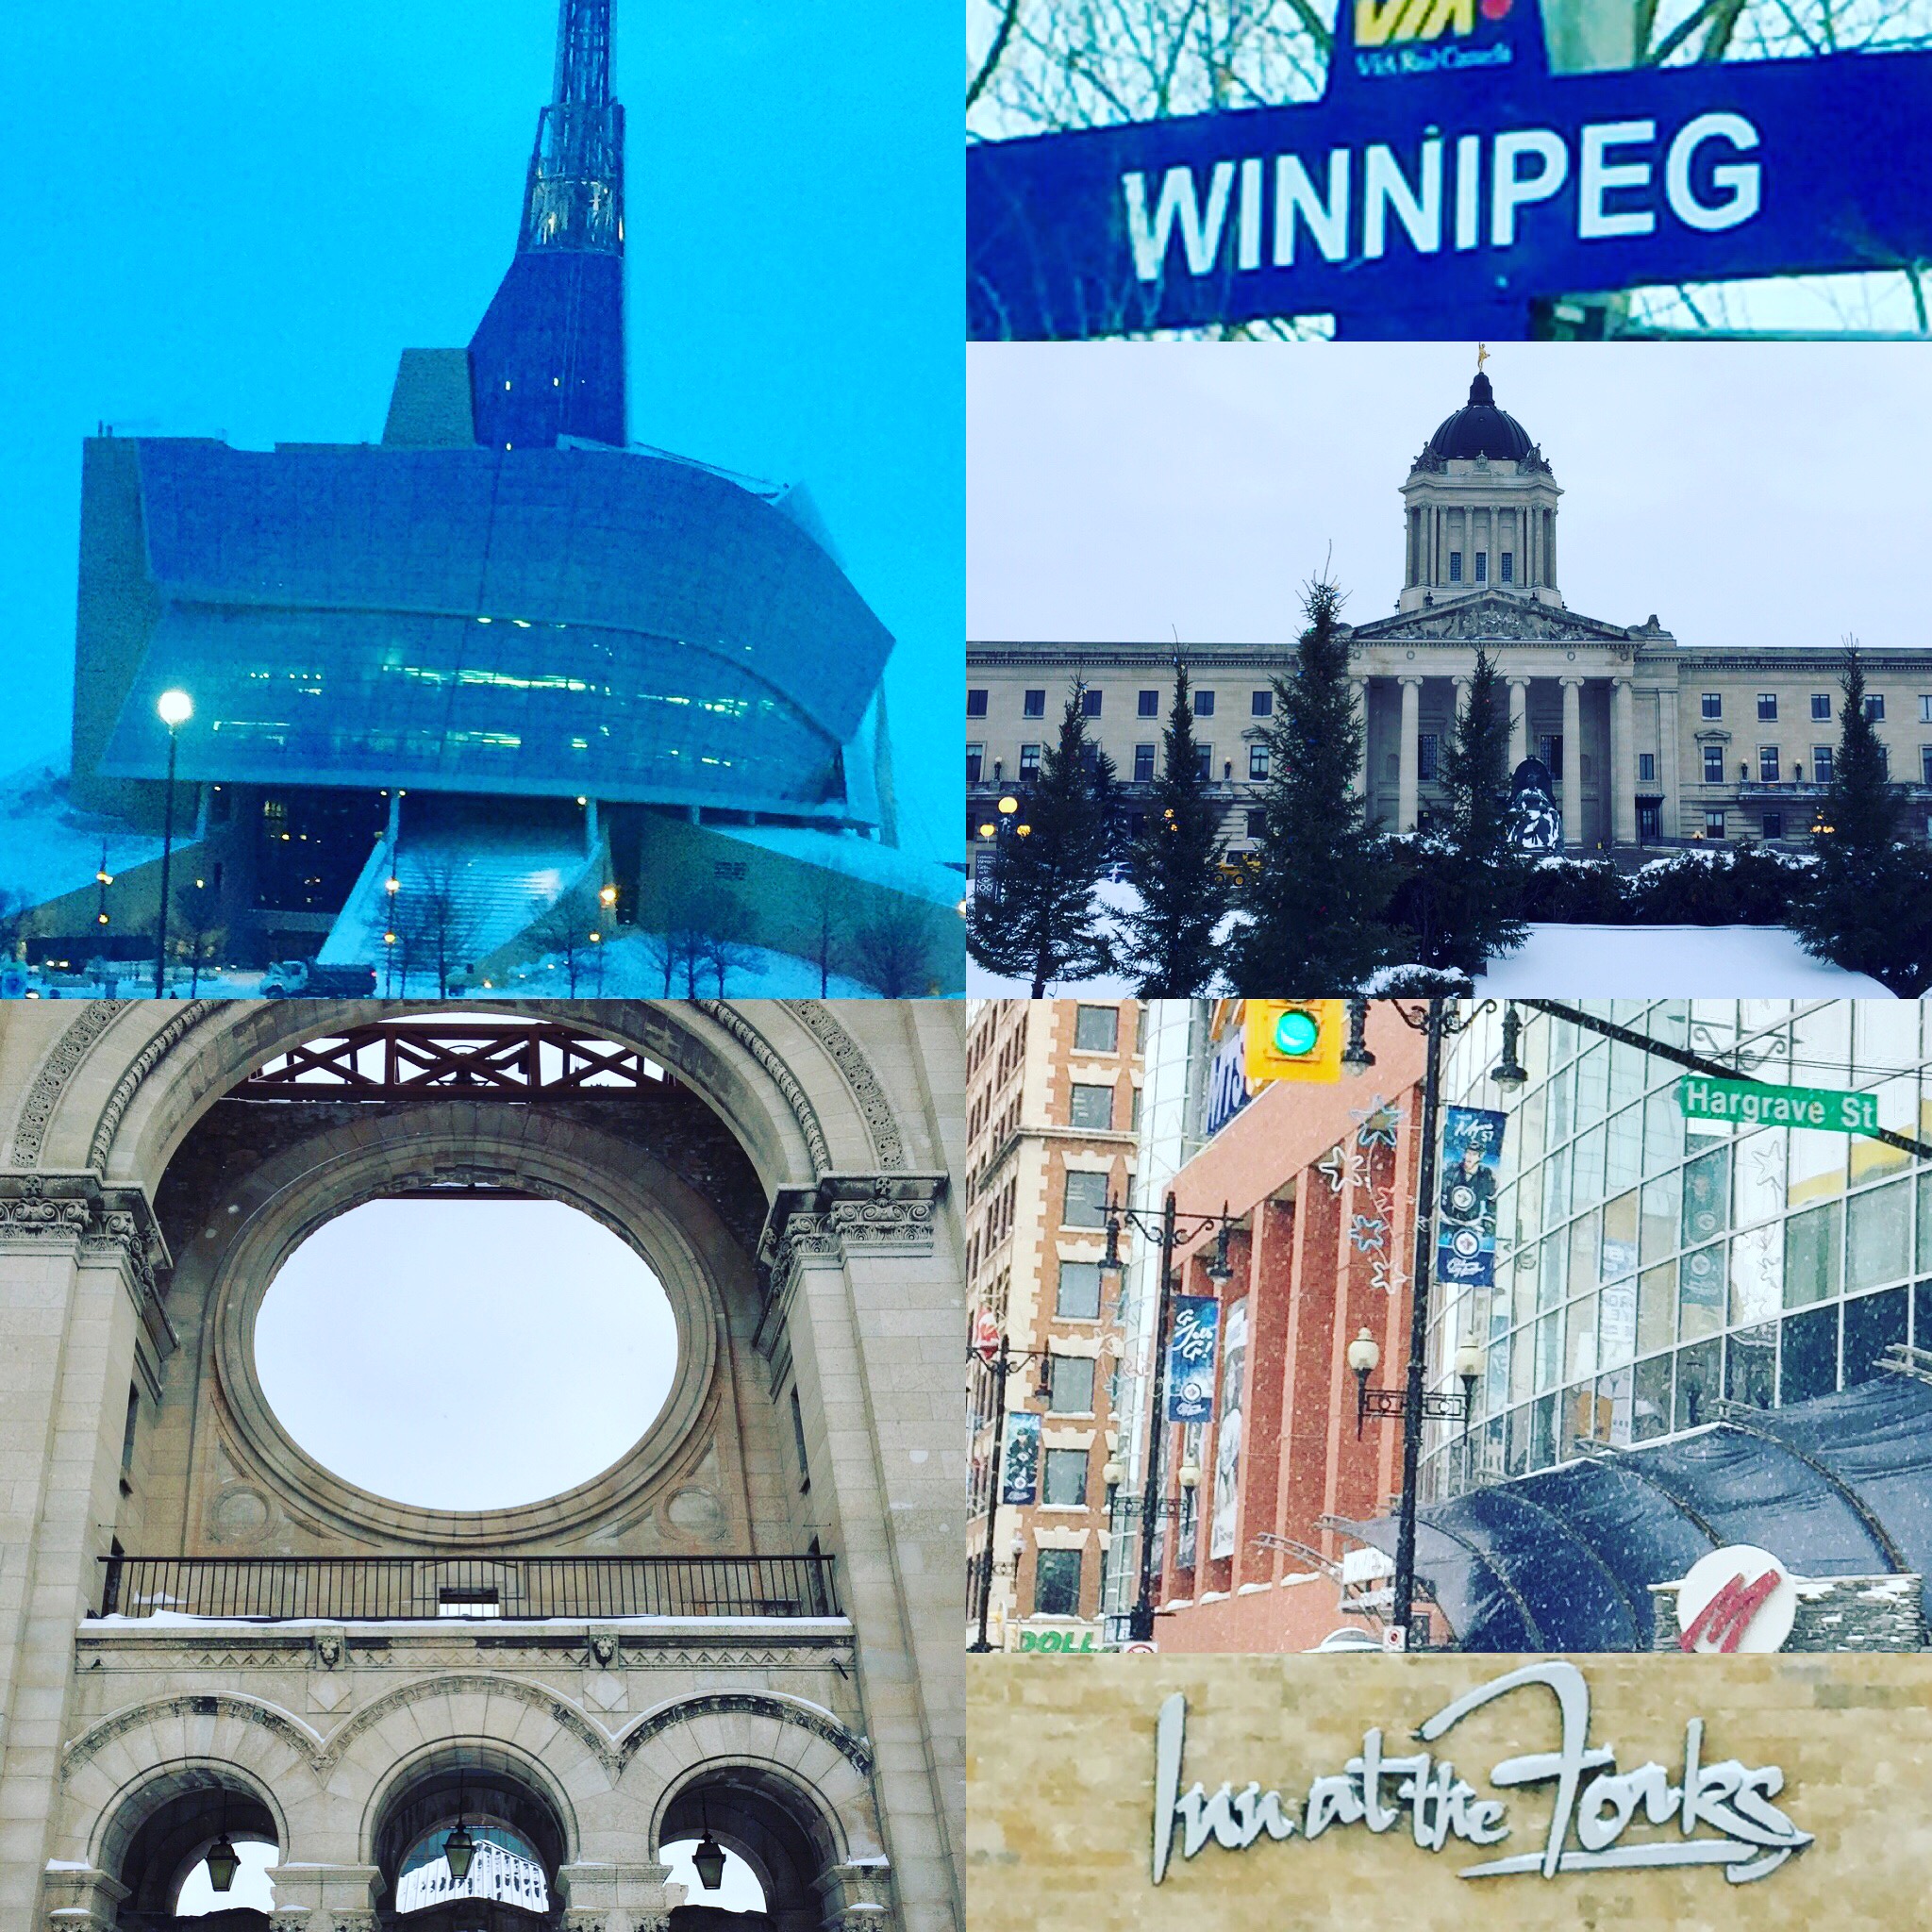 Welcome to Winnipeg